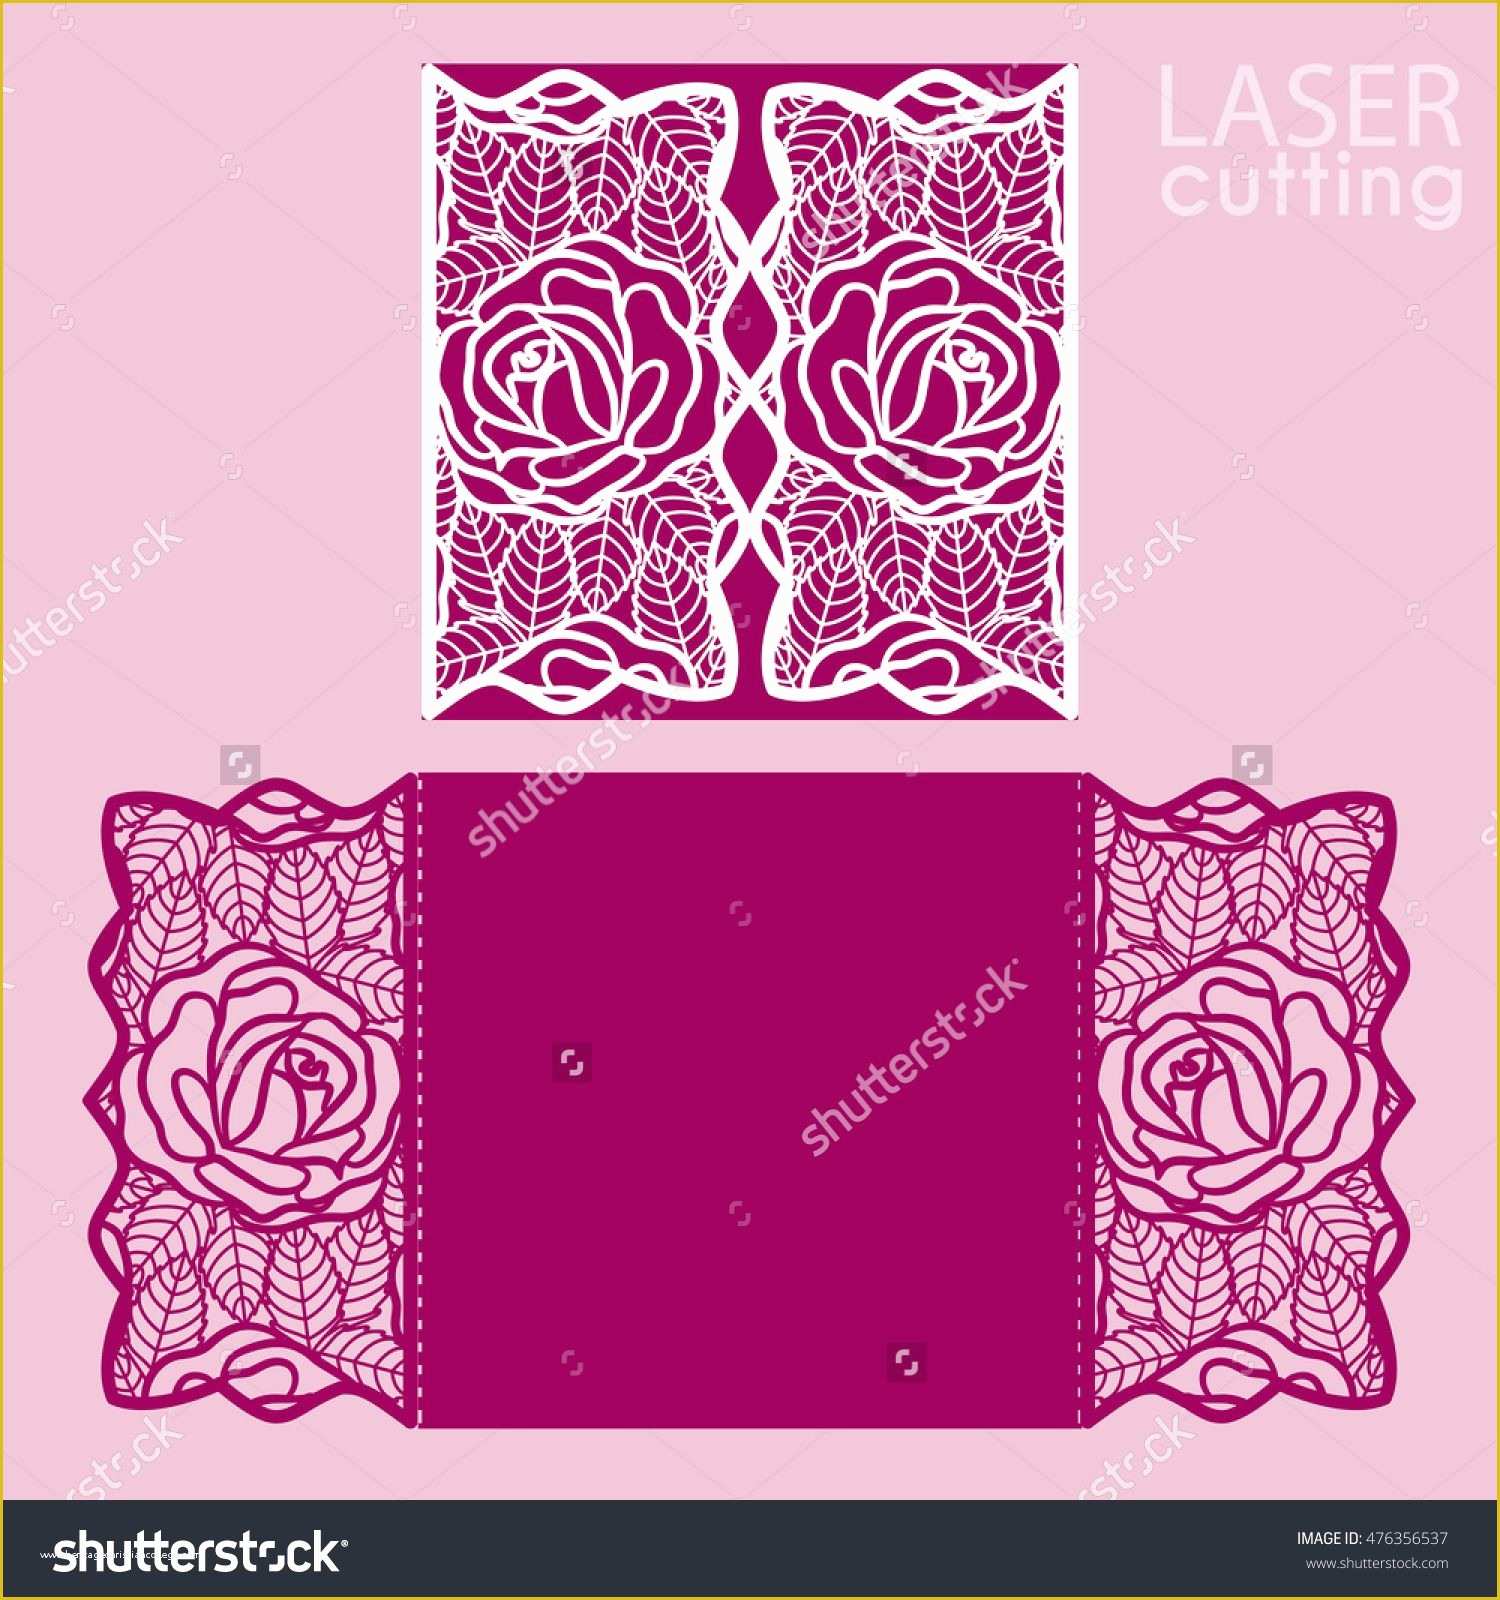 Laser Cut Templates Free Of Laser Cut Wedding Invitation Card Template Vector Cut